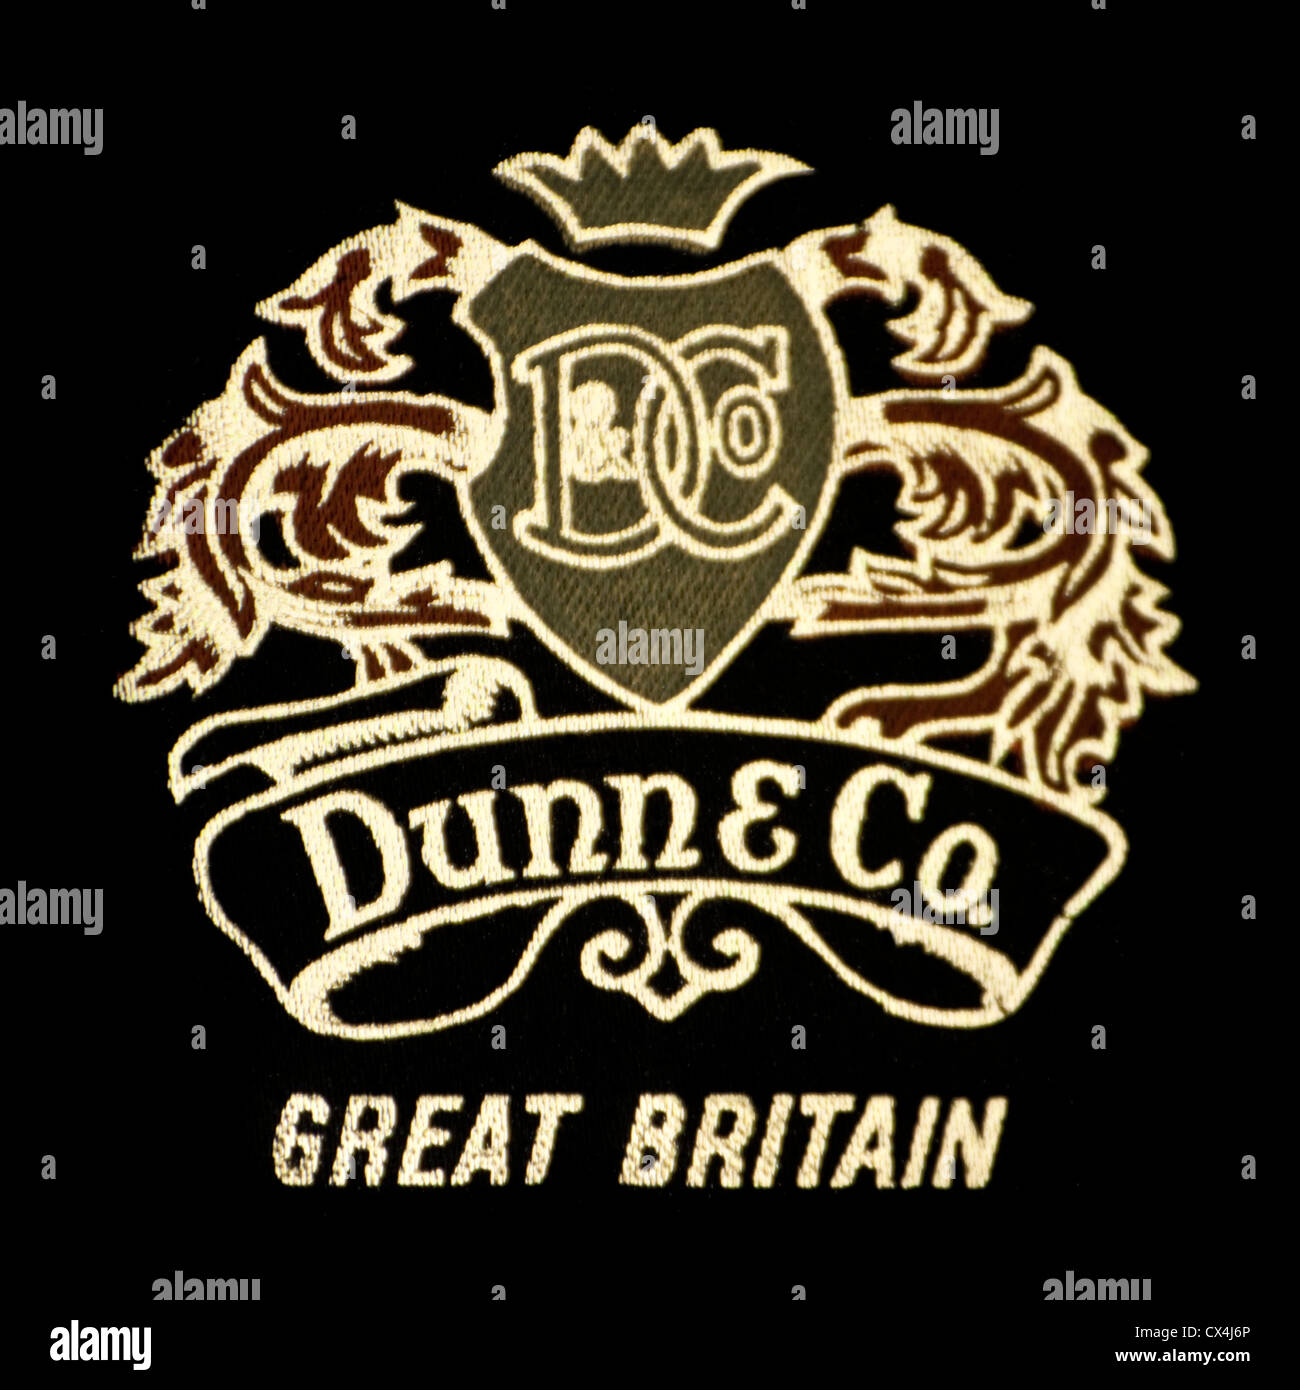 Dunn & Co company emblem inside vintage bowler hat Stock Photo - Alamy